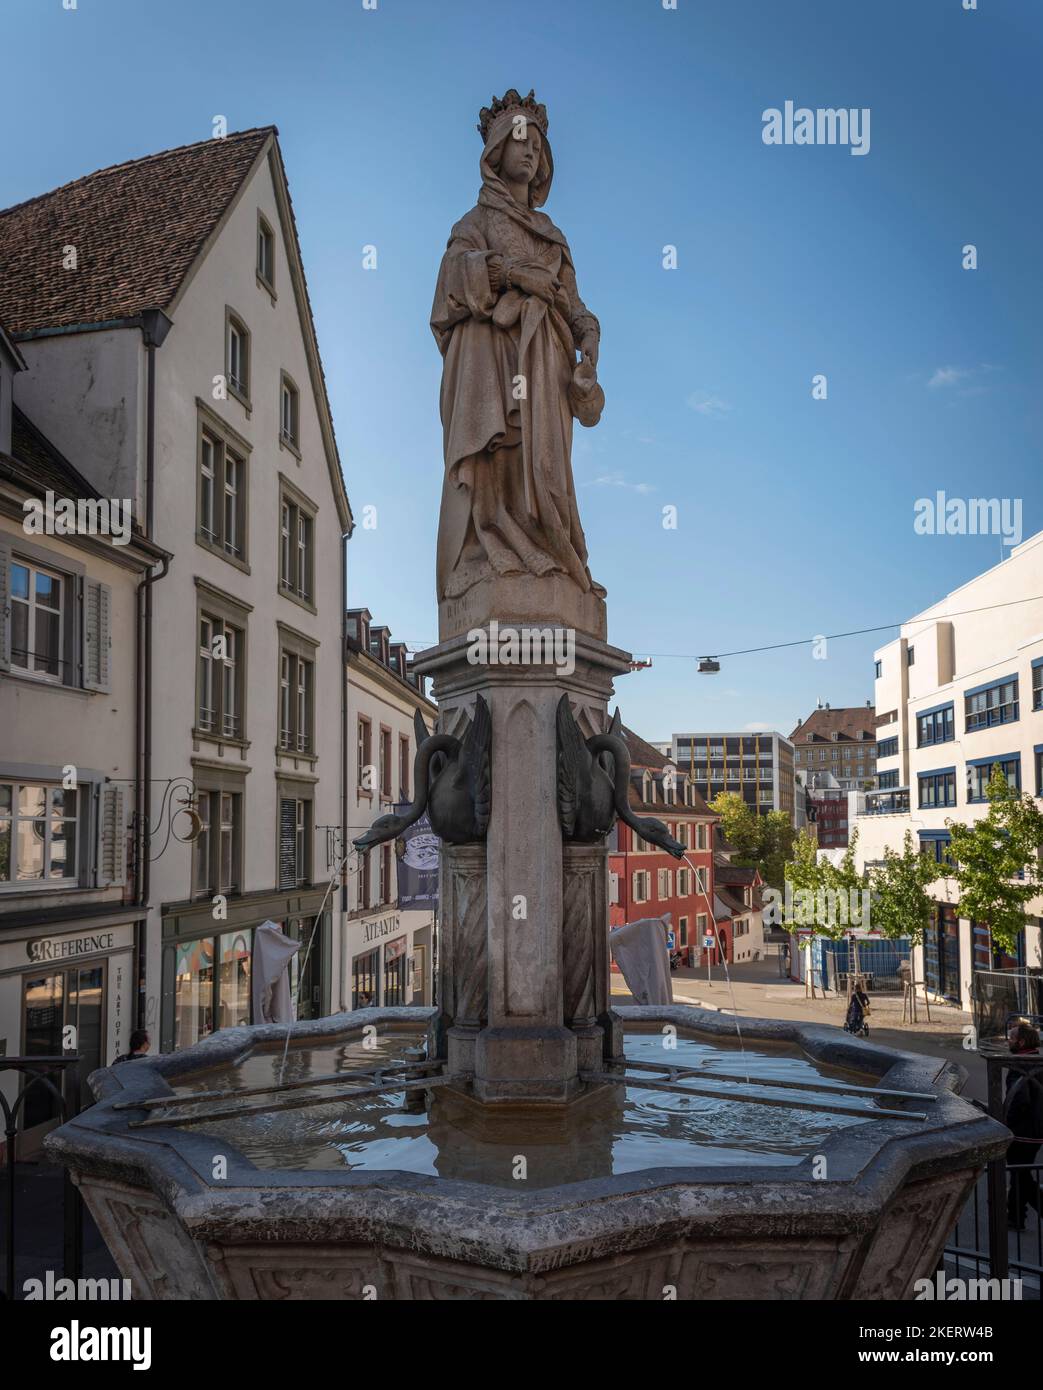 Una fontana ornata di acqua potabile nella parte più antica di Basilea in Svizzera Foto Stock